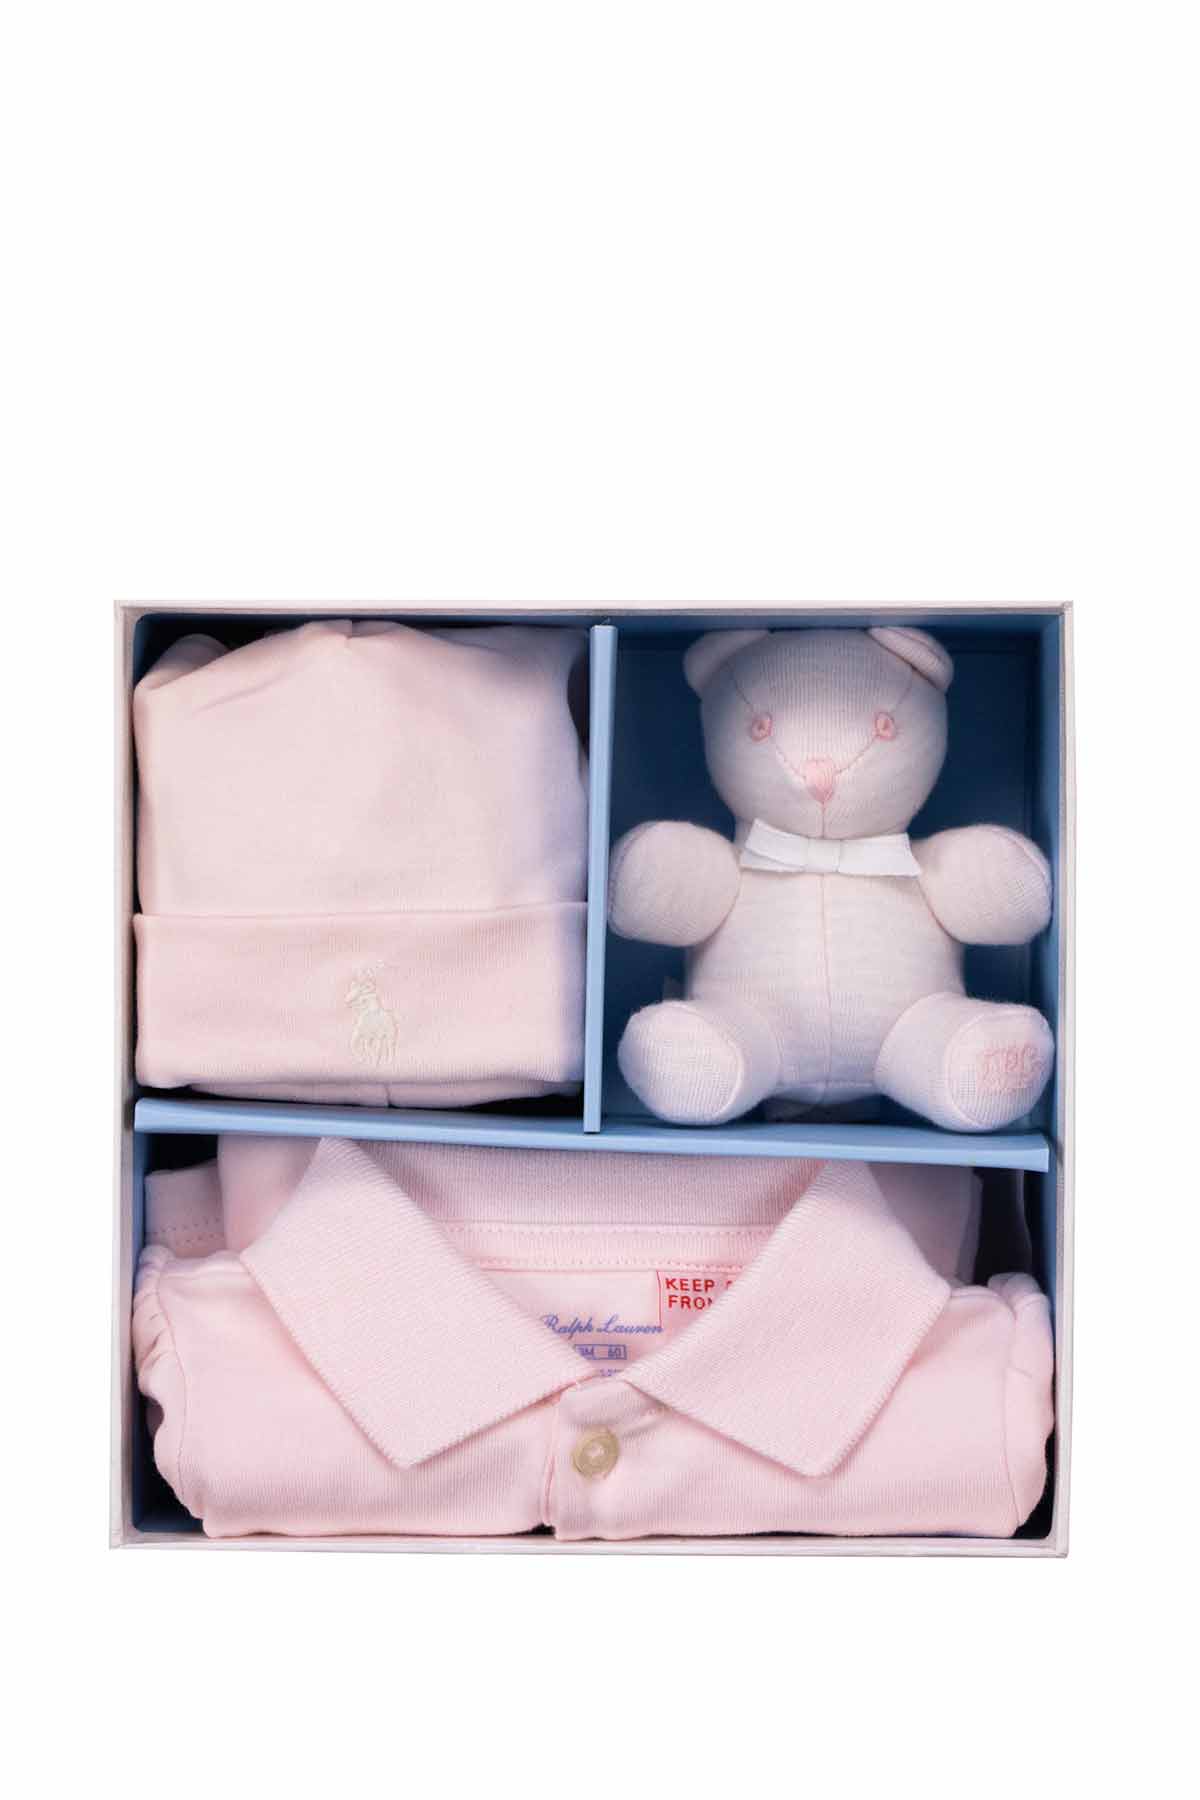 Polo Ralph Lauren 3-6 Ay Kız Bebek Tulum Set-Libas Trendy Fashion Store